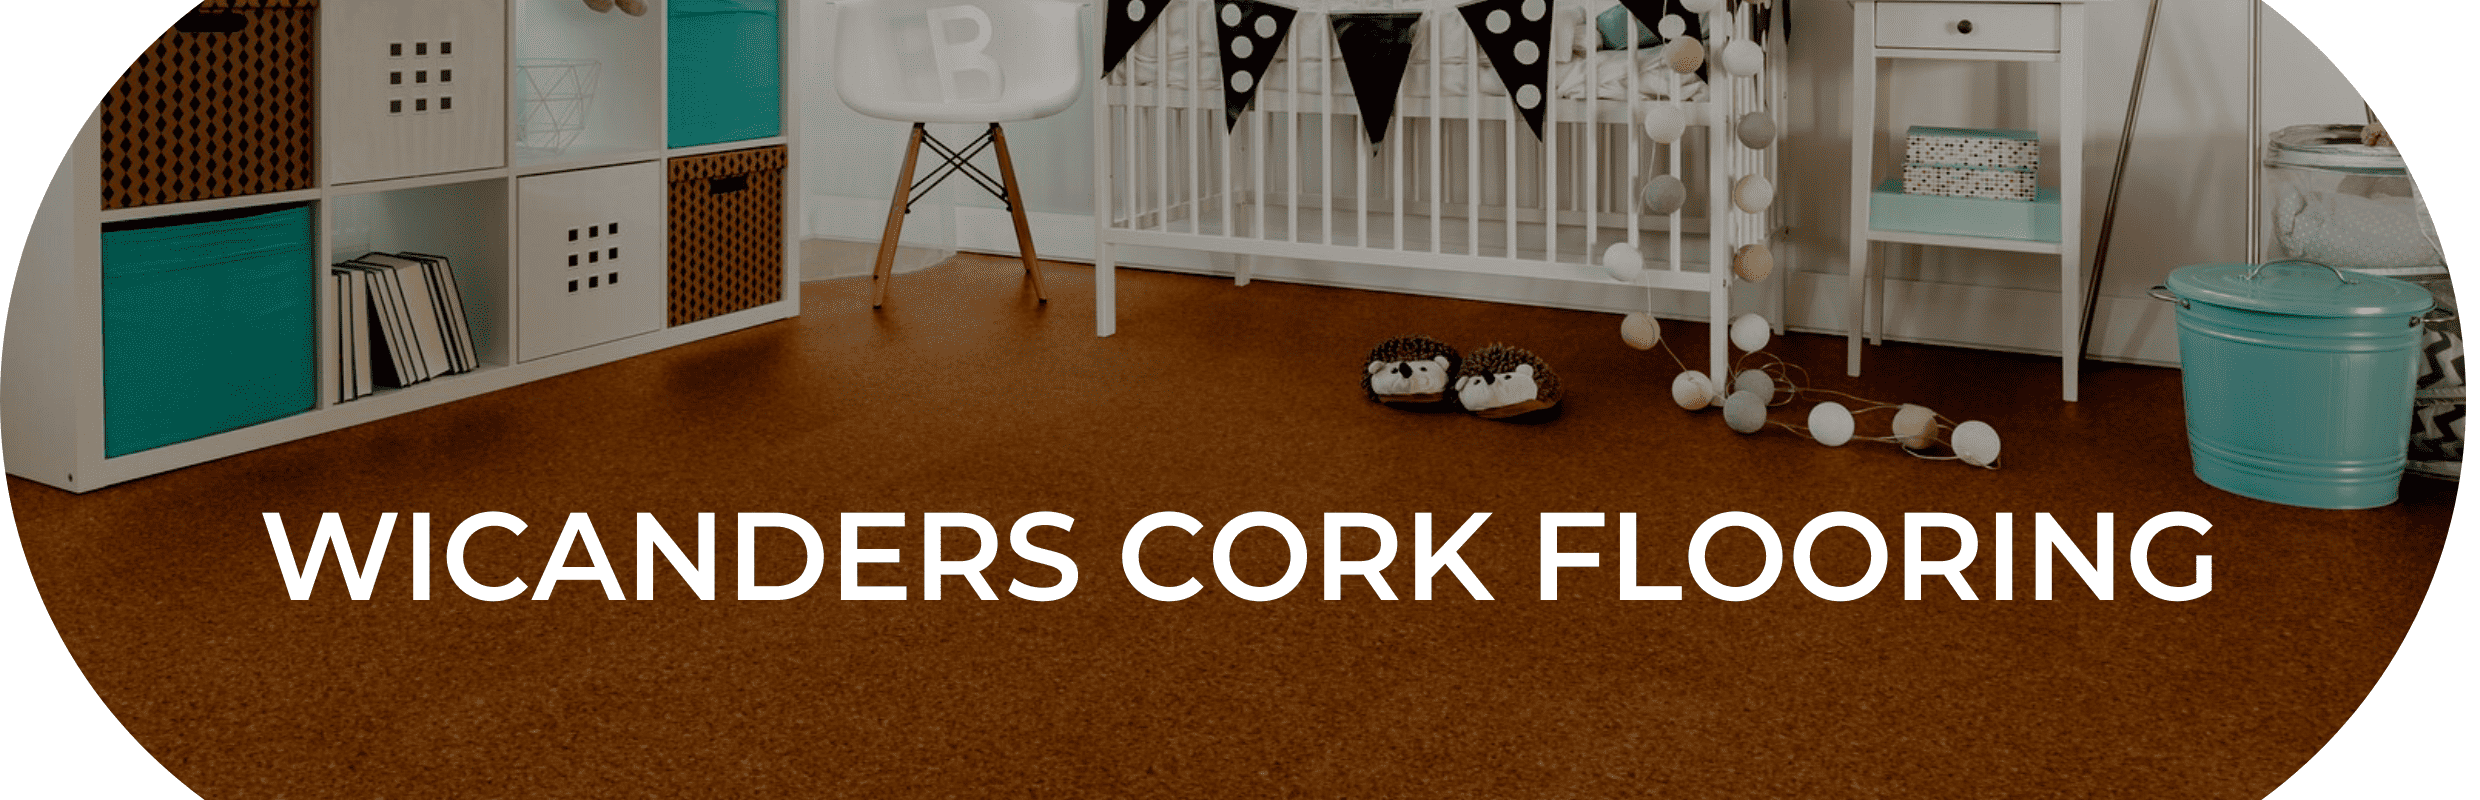 Cork PURE Glue Down Cork Flooring - Identity Moonlight